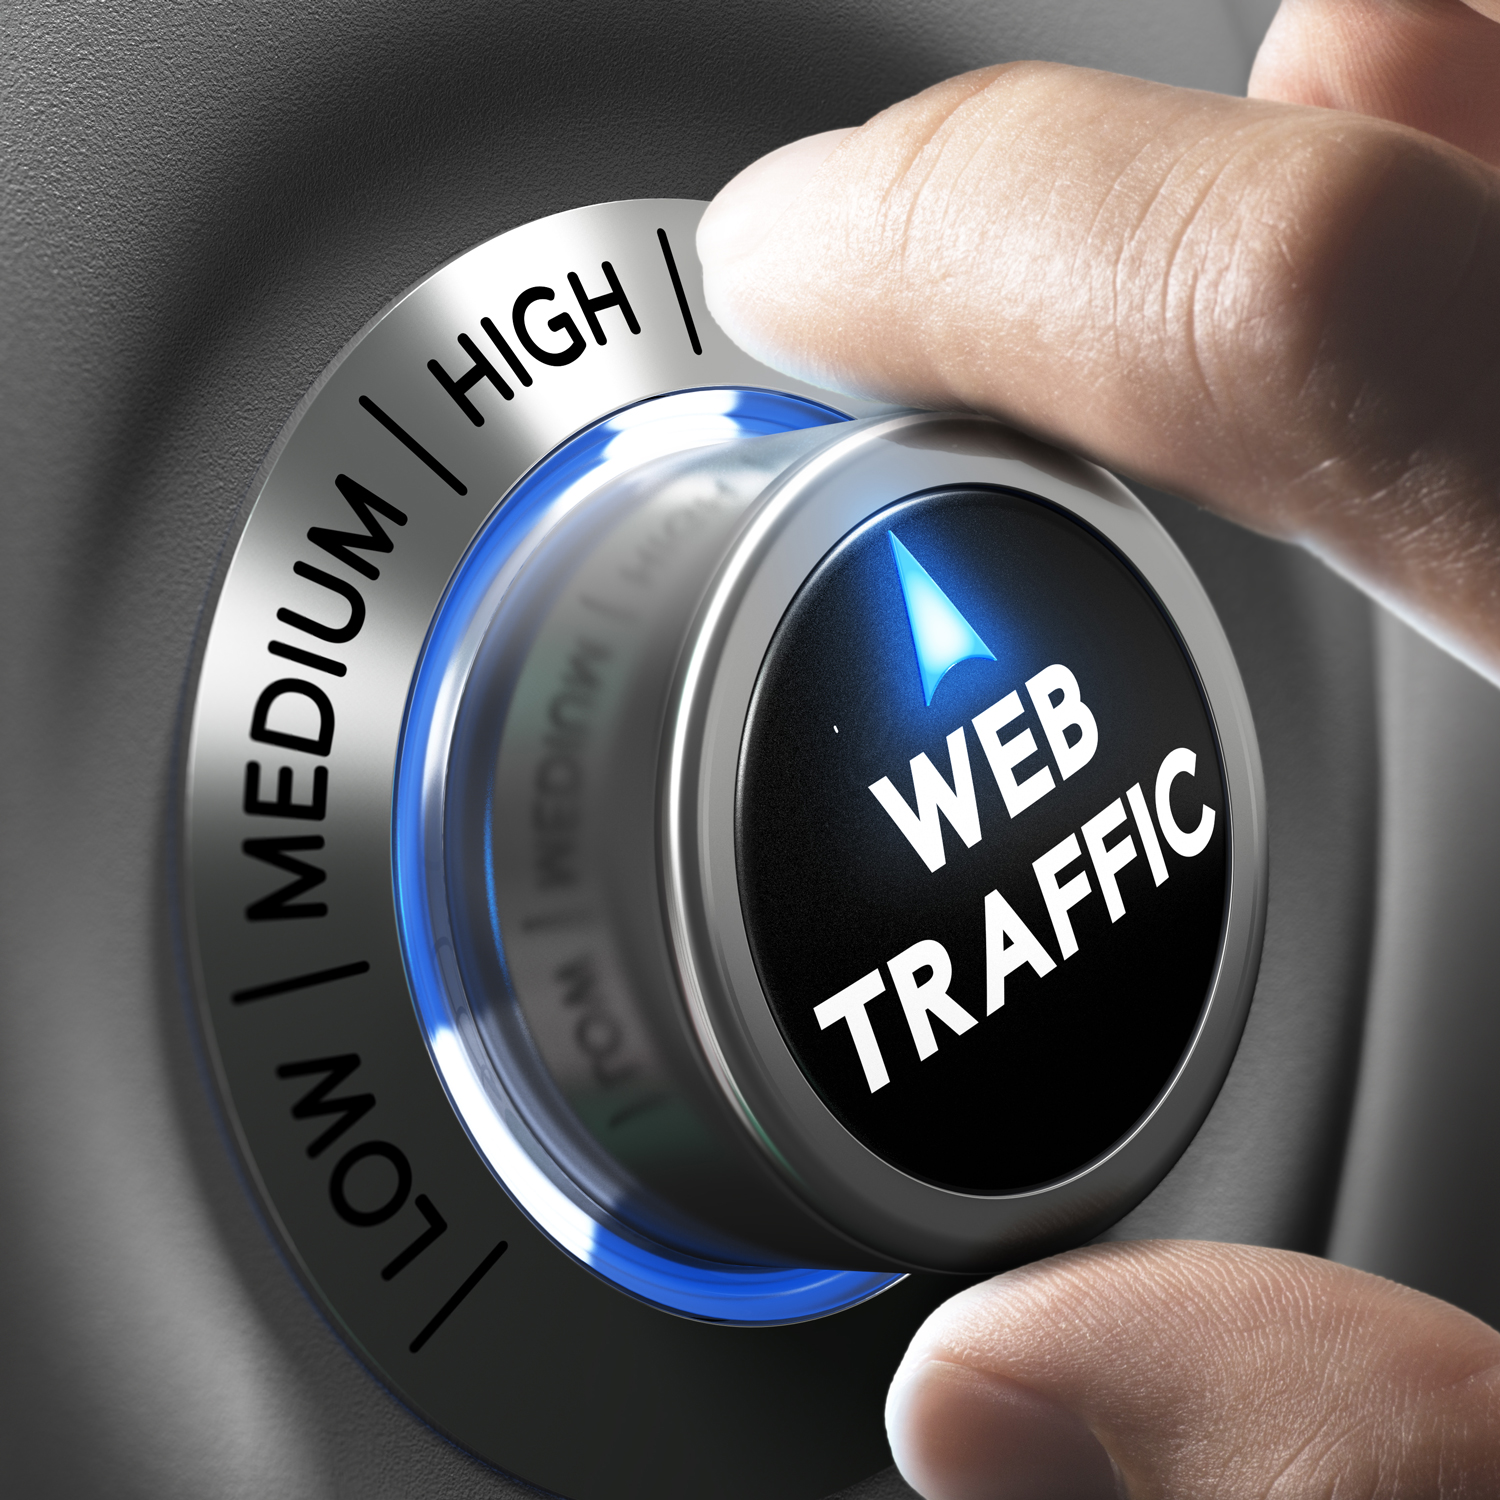 Web Traffic Button